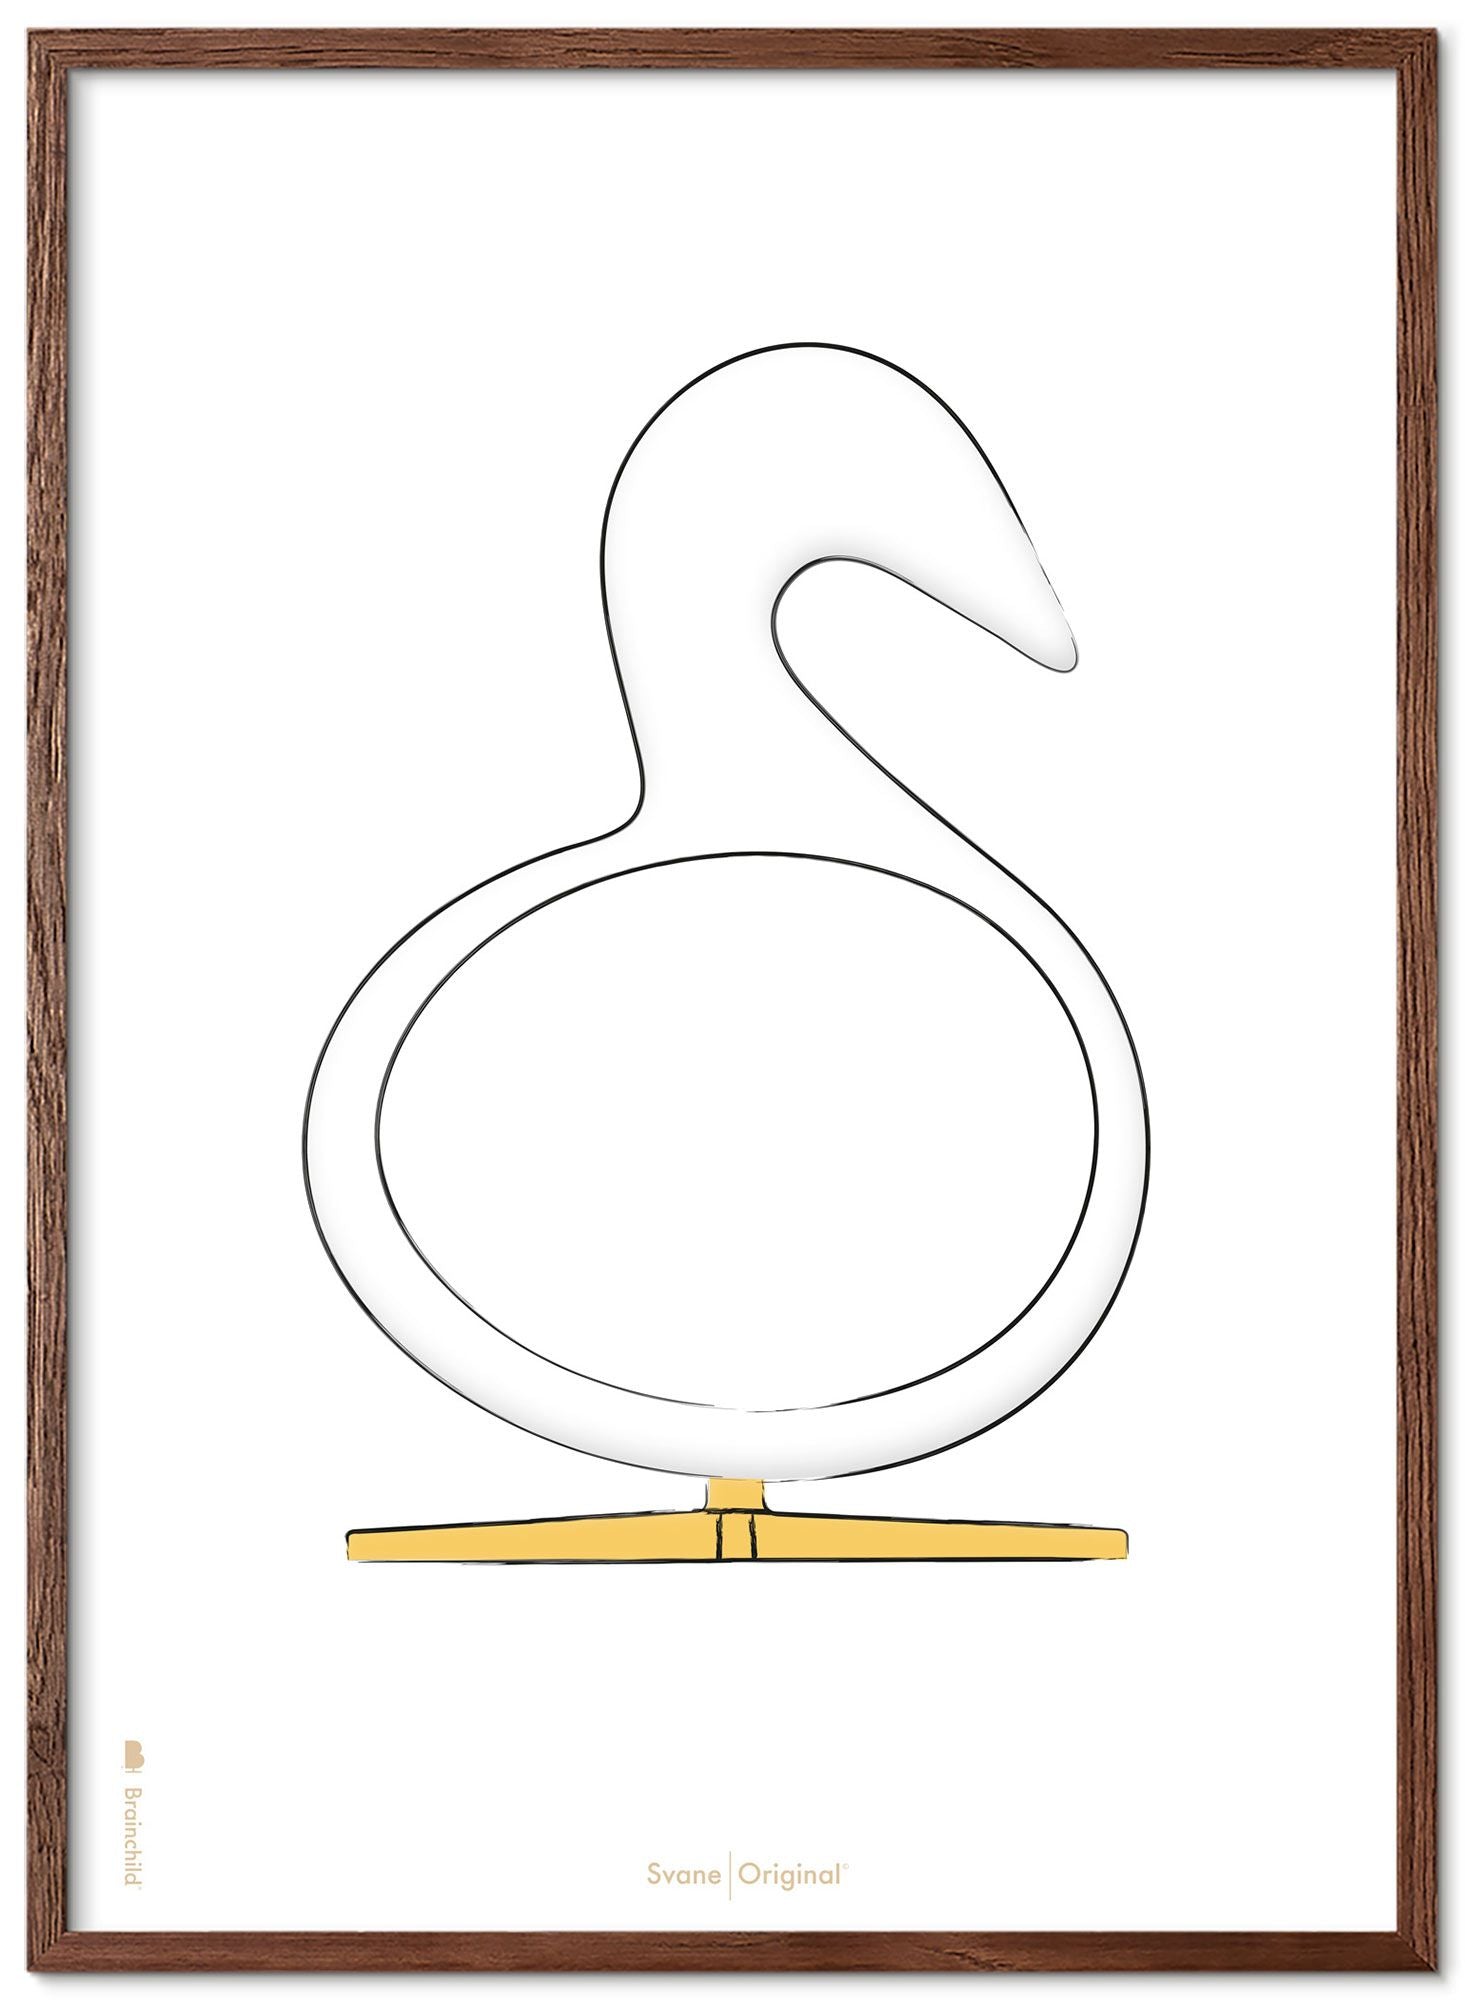 Brainchild Swan Design Sketch Poster Frame Made Of Dark Wood A5, White Background